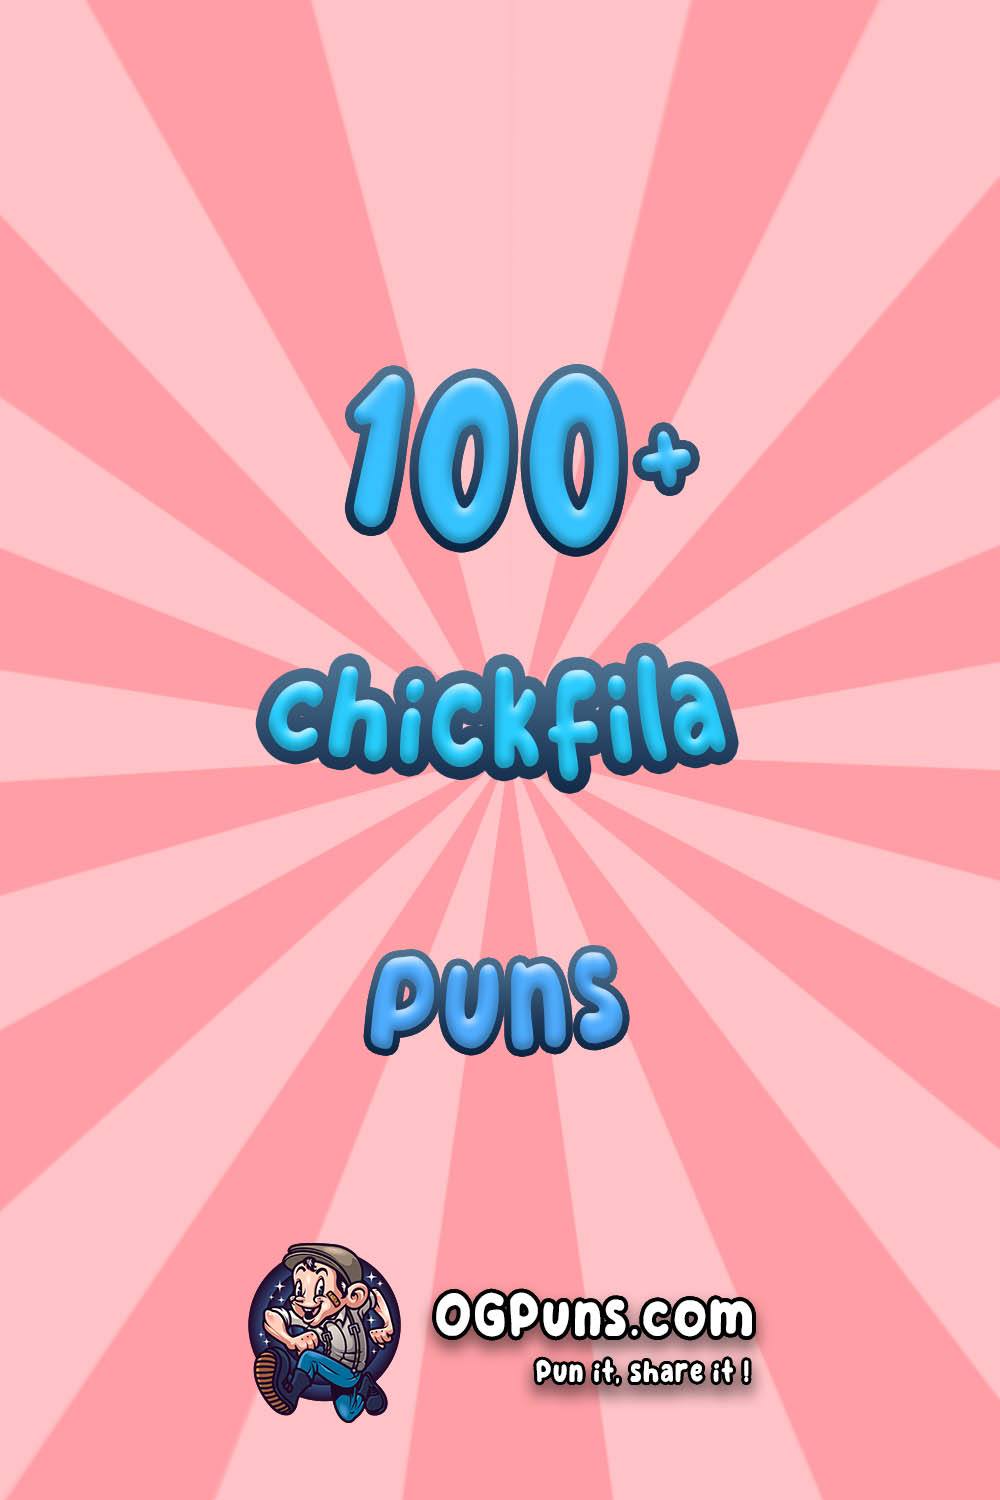 Chickfila puns Image for Pinterest